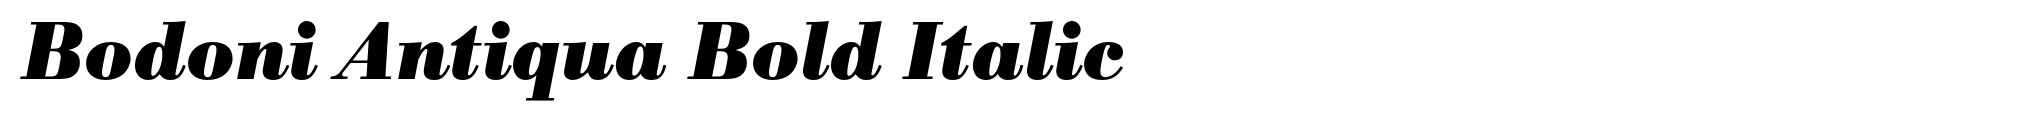 Bodoni Antiqua Bold Italic image